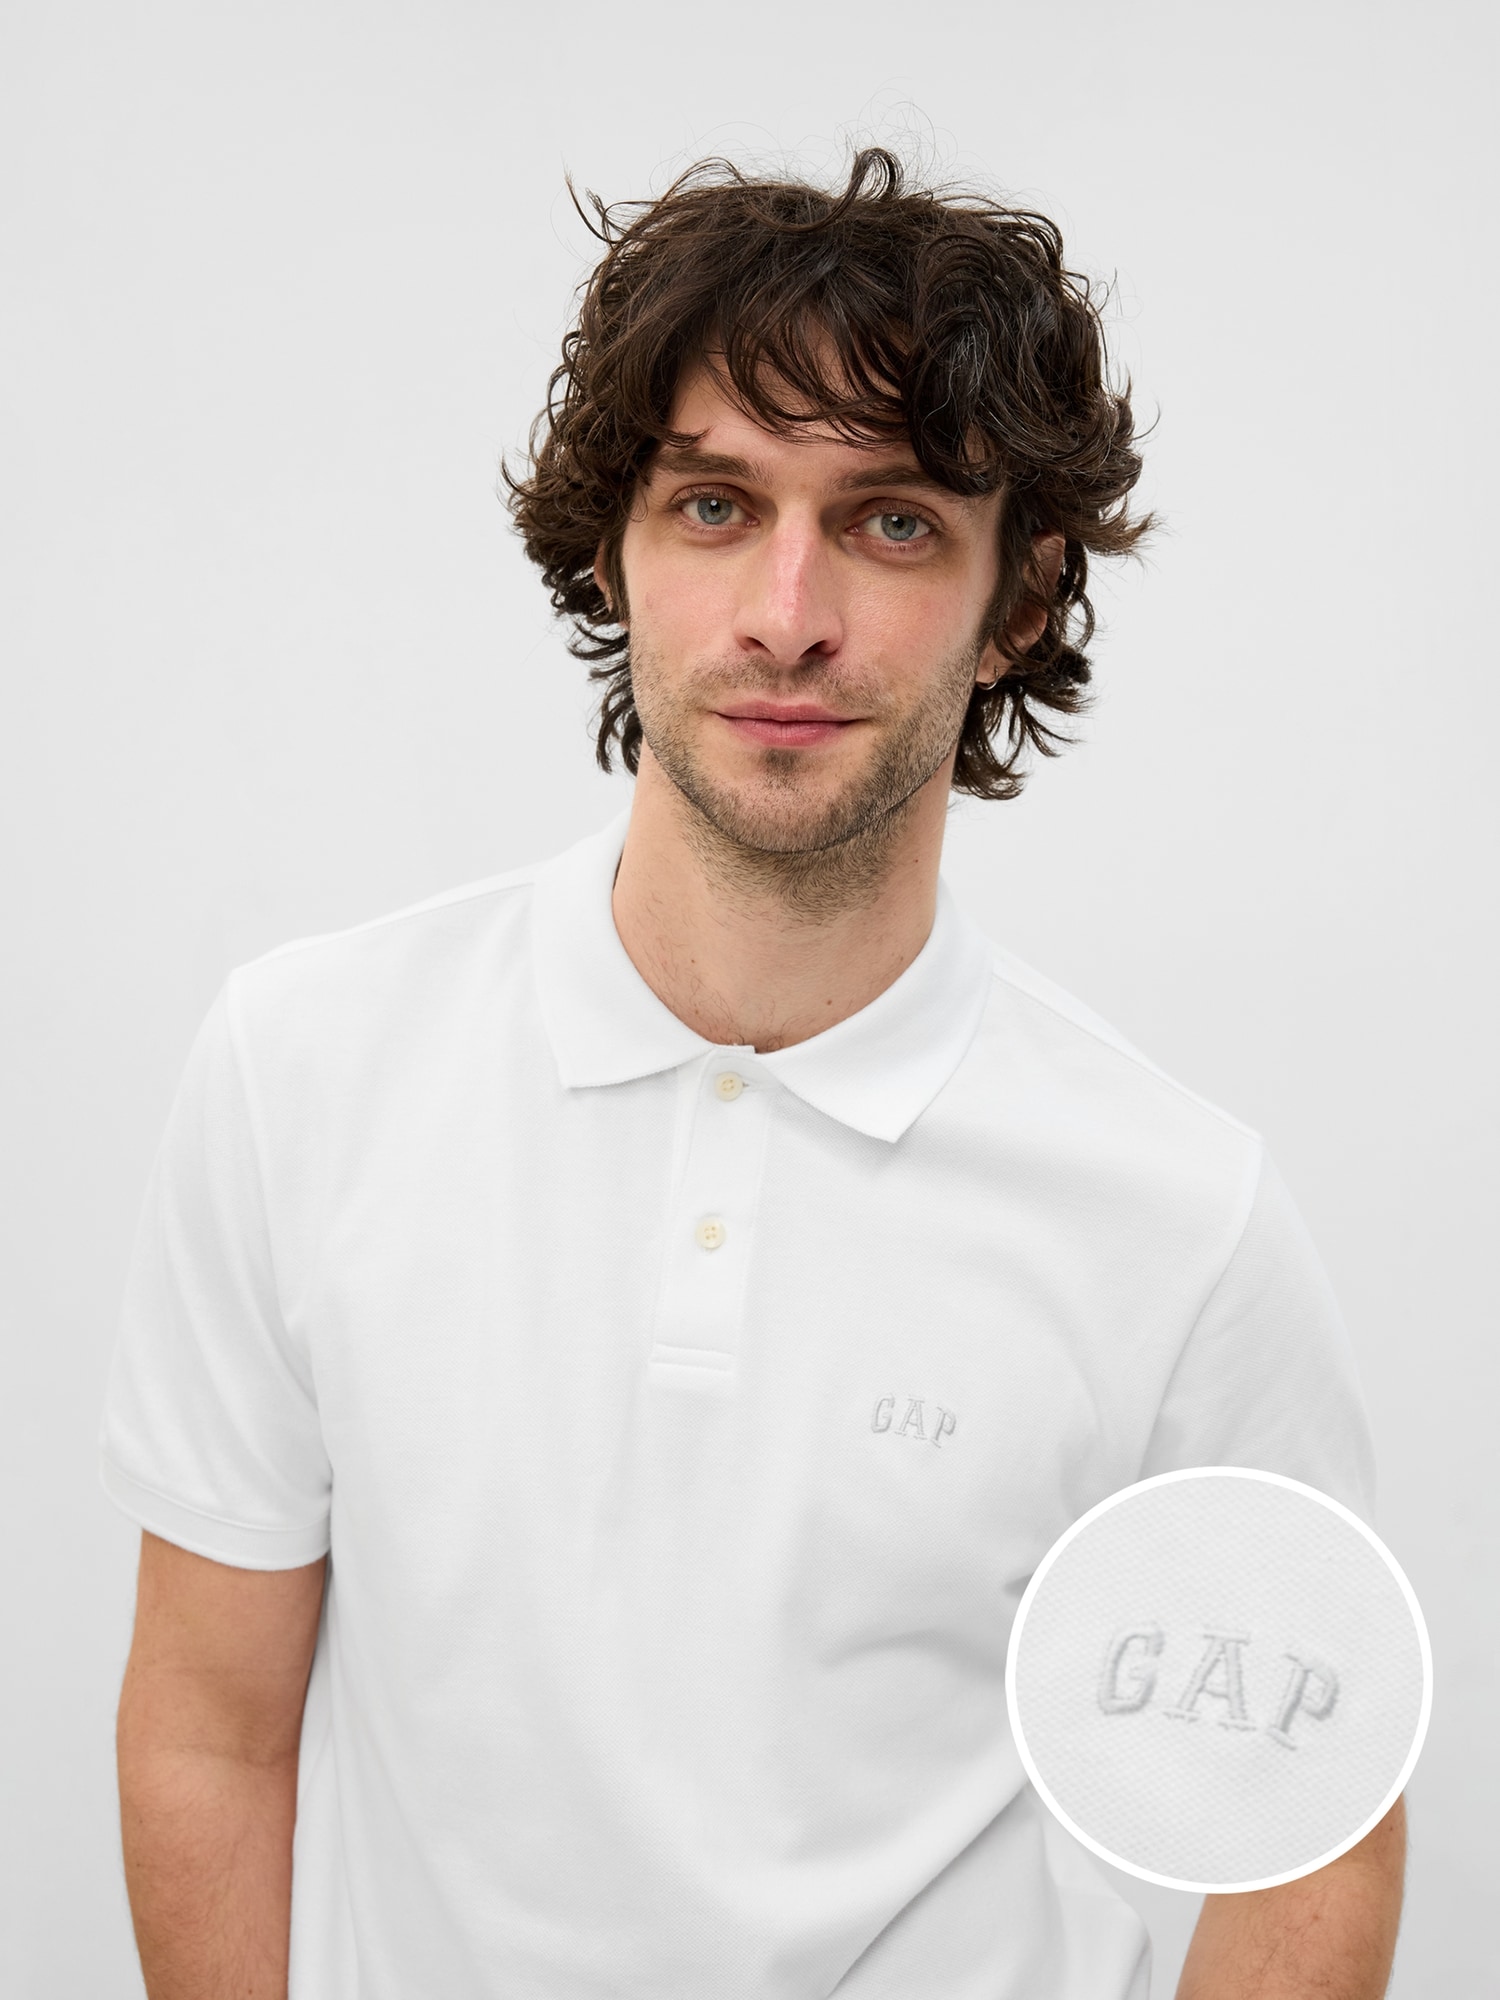 Gapロゴ ポロシャツ(ユニセックス)